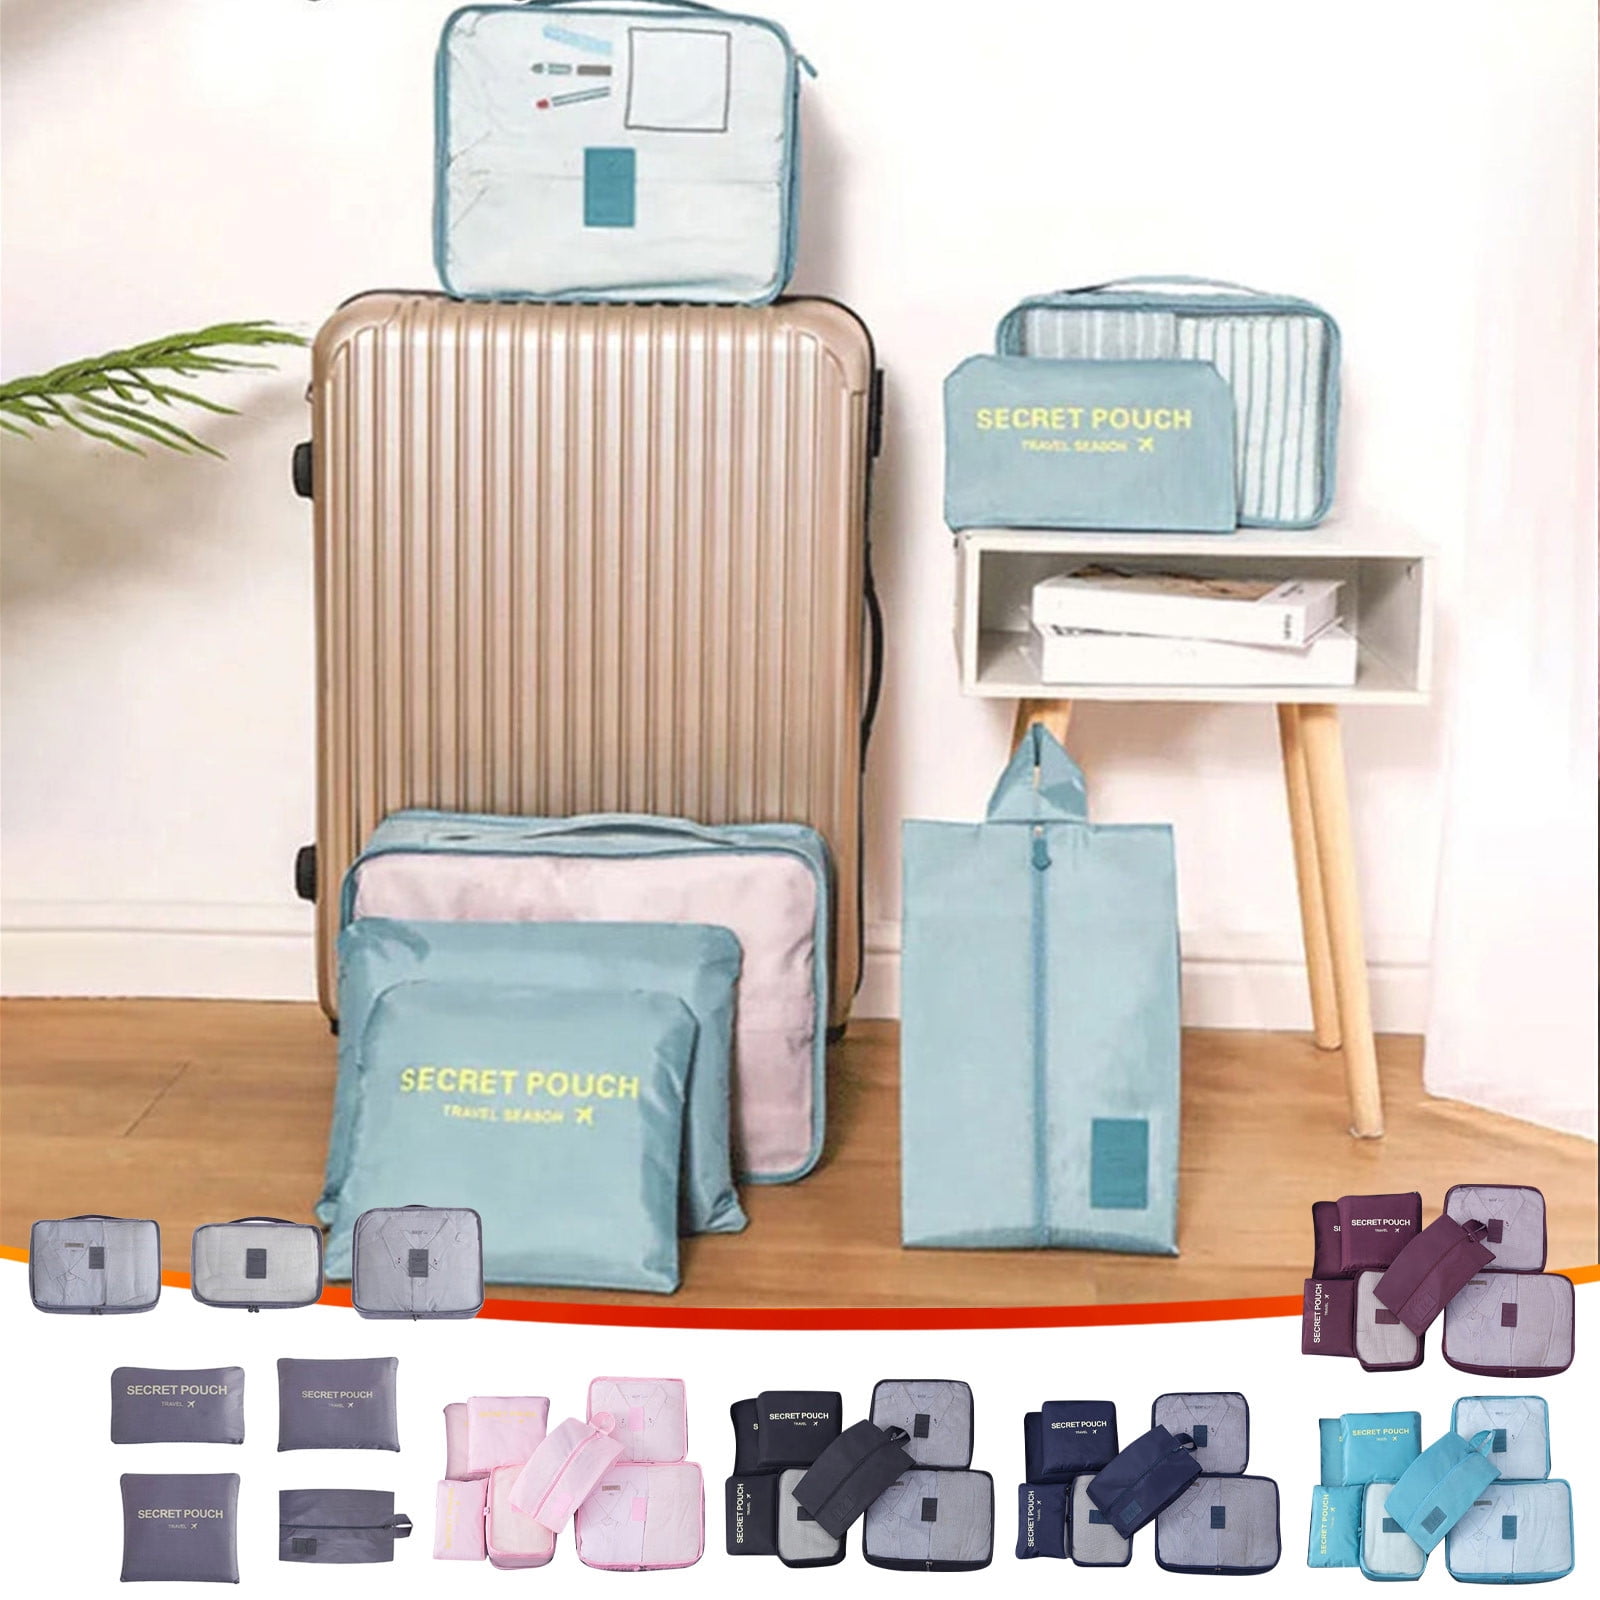 Covermates Keepsakes – Canvas Storage Bag - Premium Canvas - Carrying Handles -Dual Zipper Pulls - Indoor Storage-Natural